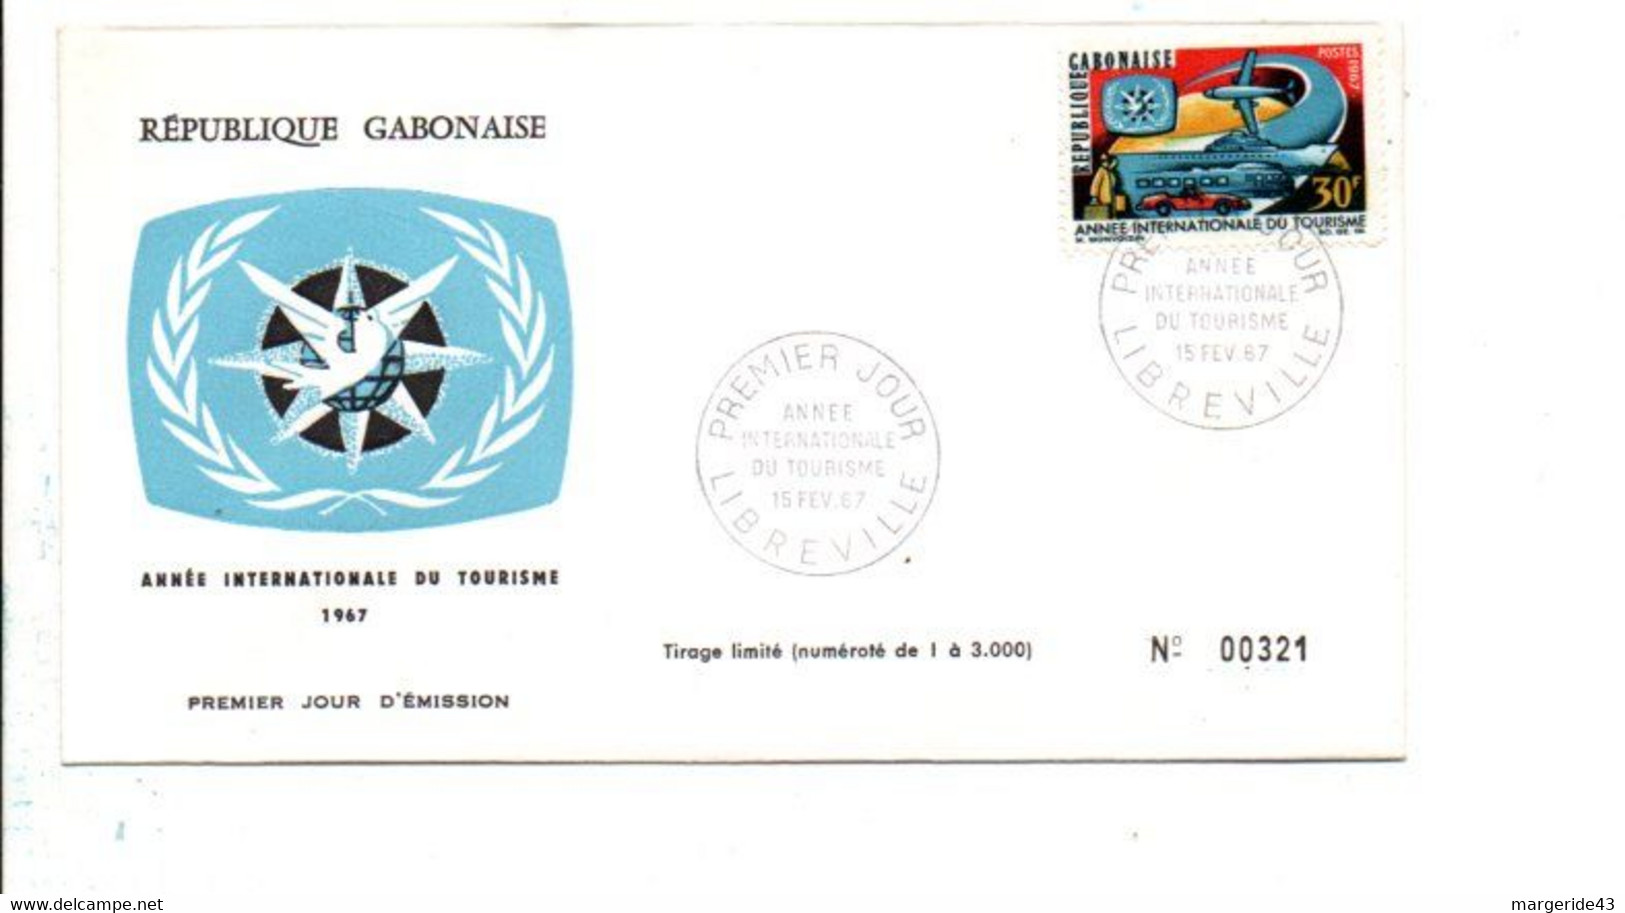 GABON FDC 1967 ANNEE INTERNATIONALE DU TOURISME - Gabon (1960-...)